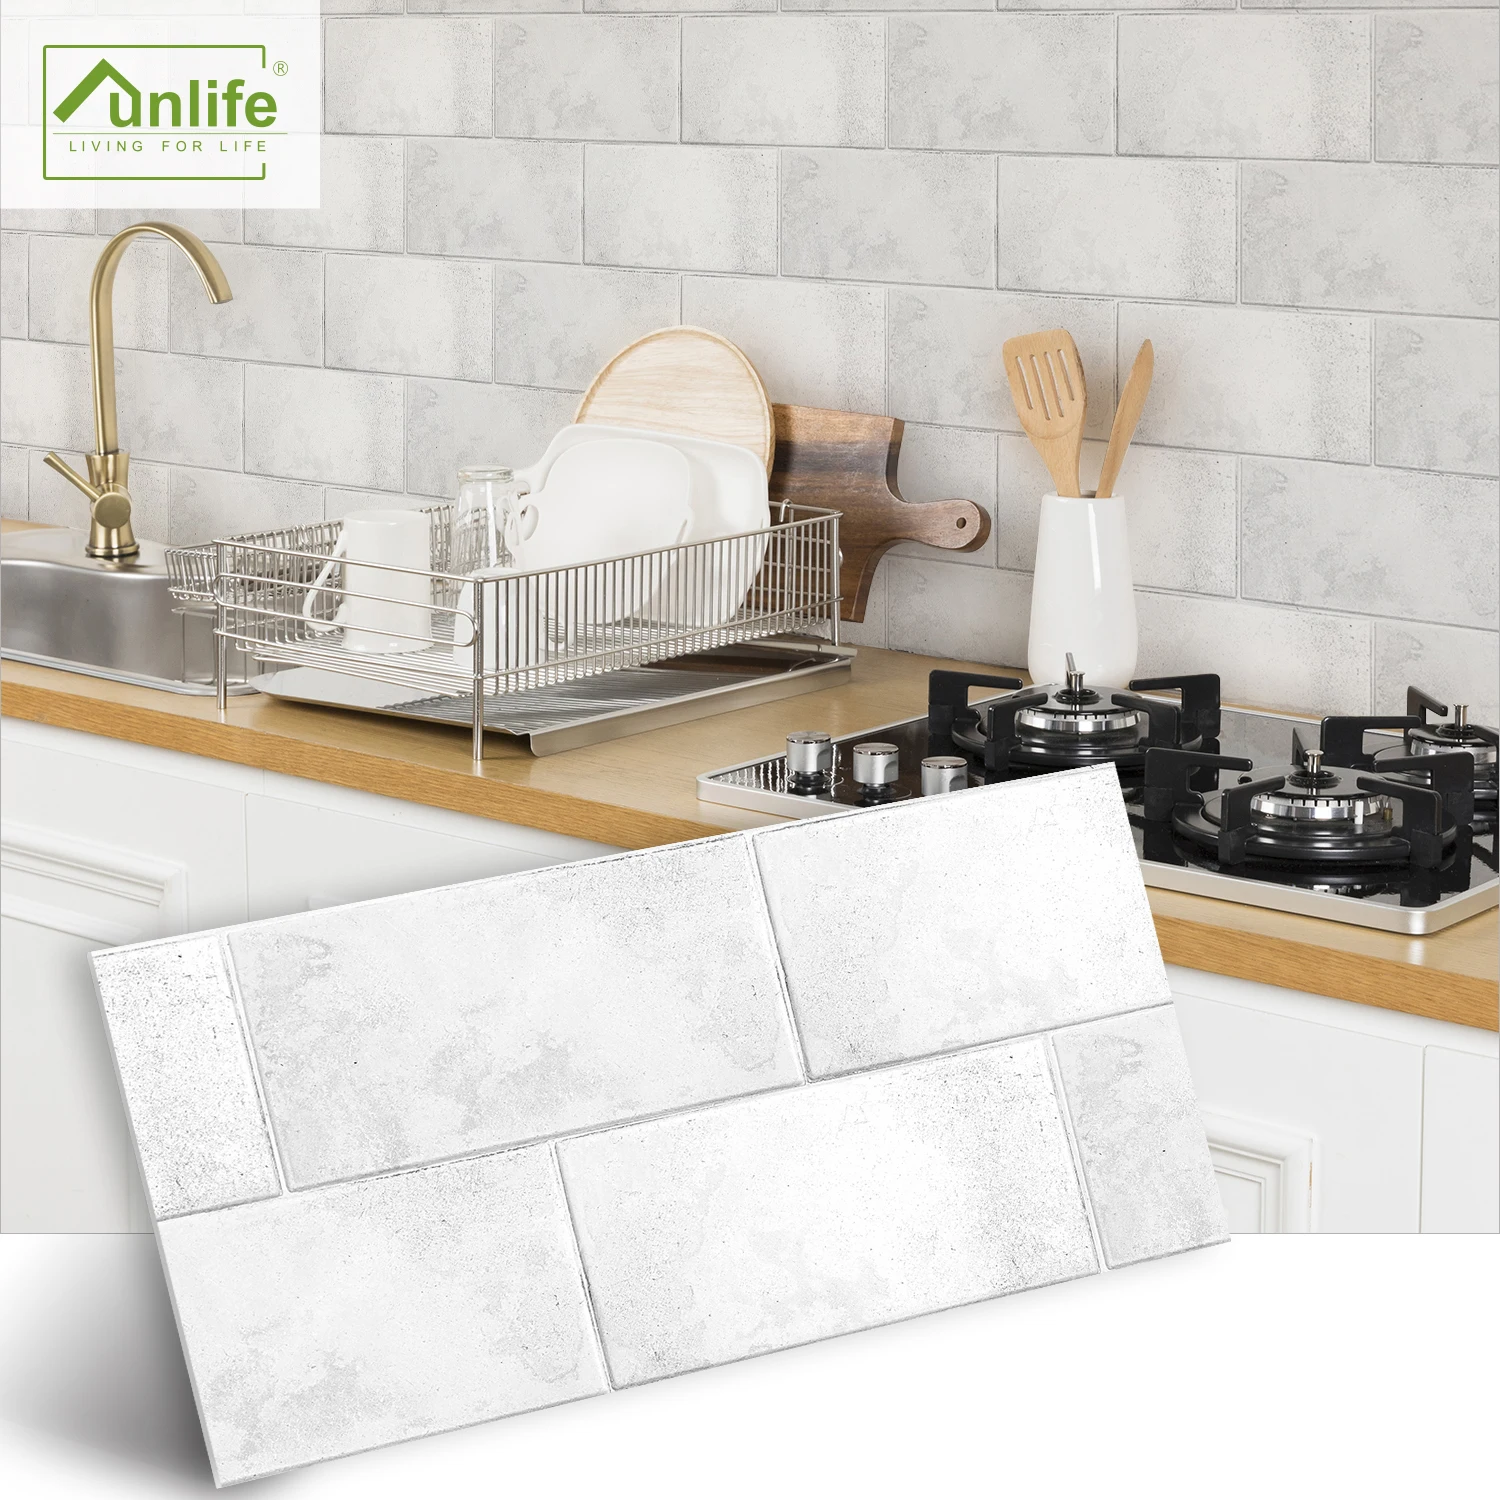 

Funlife® 30x15cm White Stone Brick Thick Tile Stickers Waterproof Wall Stickers Self-Adhesive Kitchen Backsplash Fireplace Decor